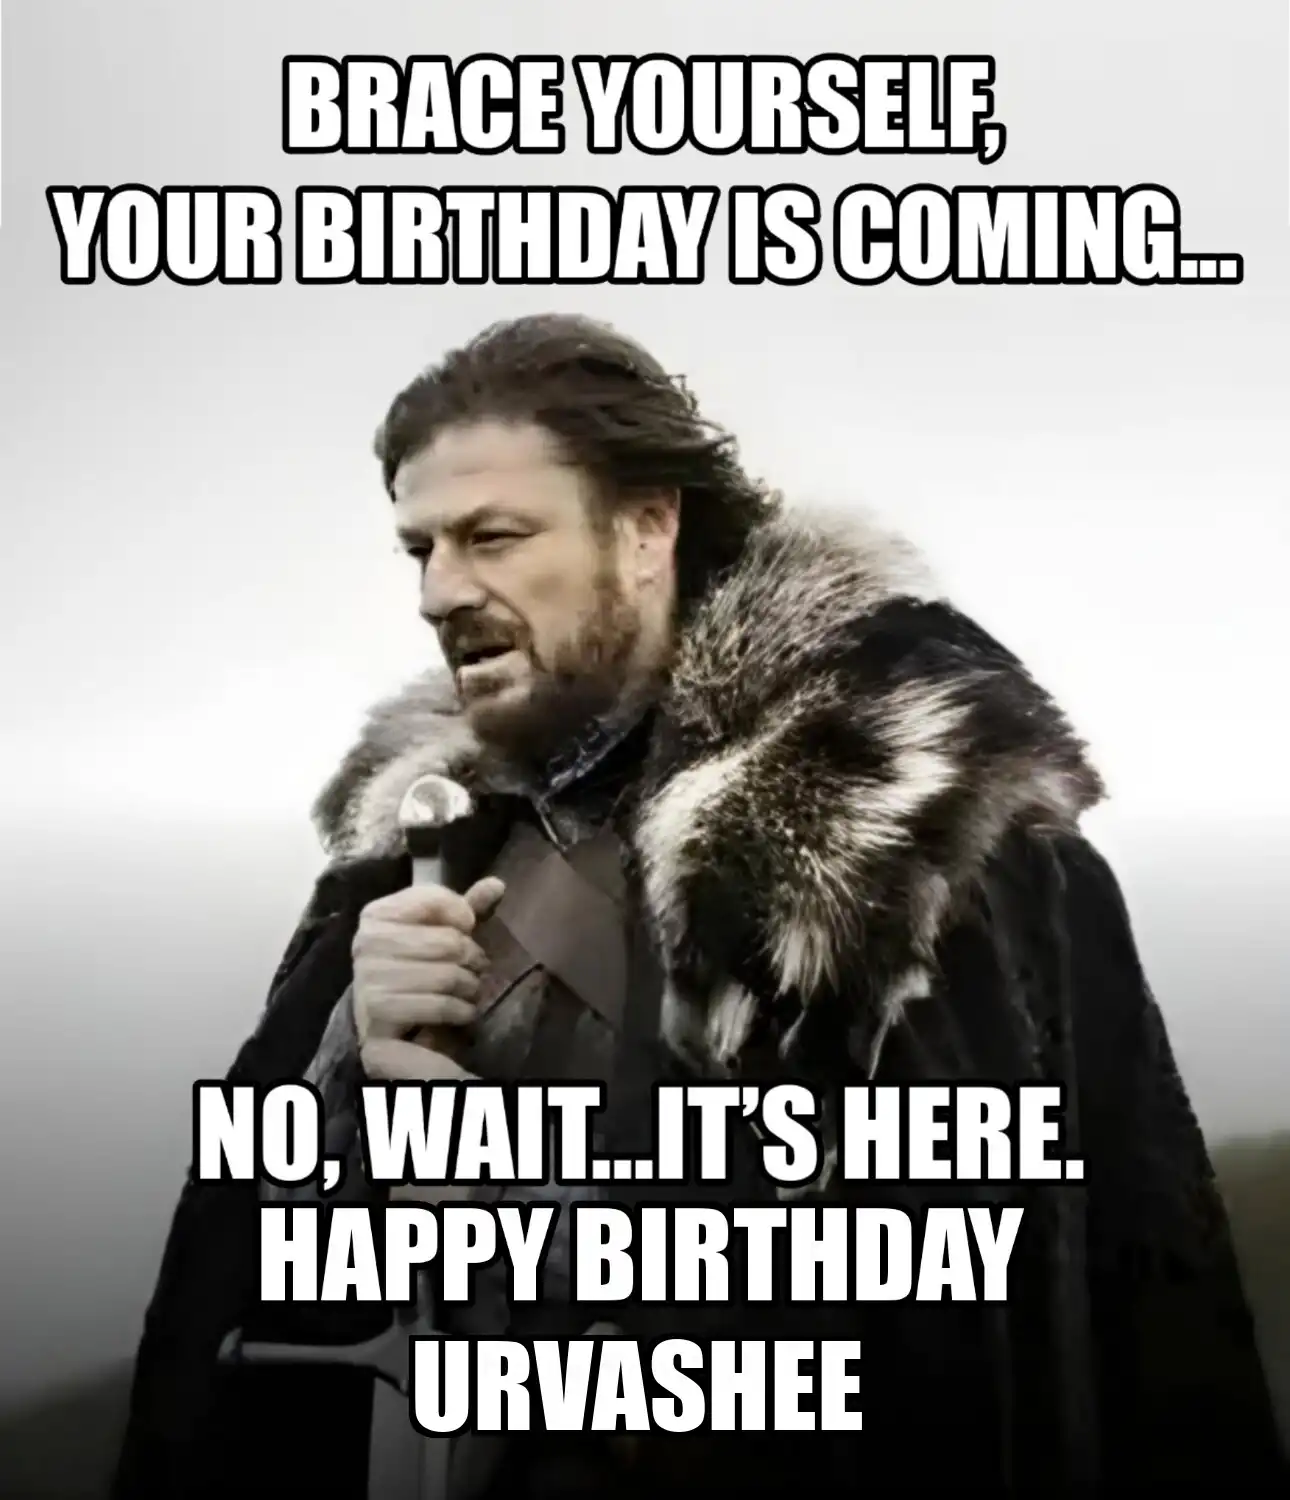 Happy Birthday Urvashee Brace Yourself Your Birthday Is Coming Meme